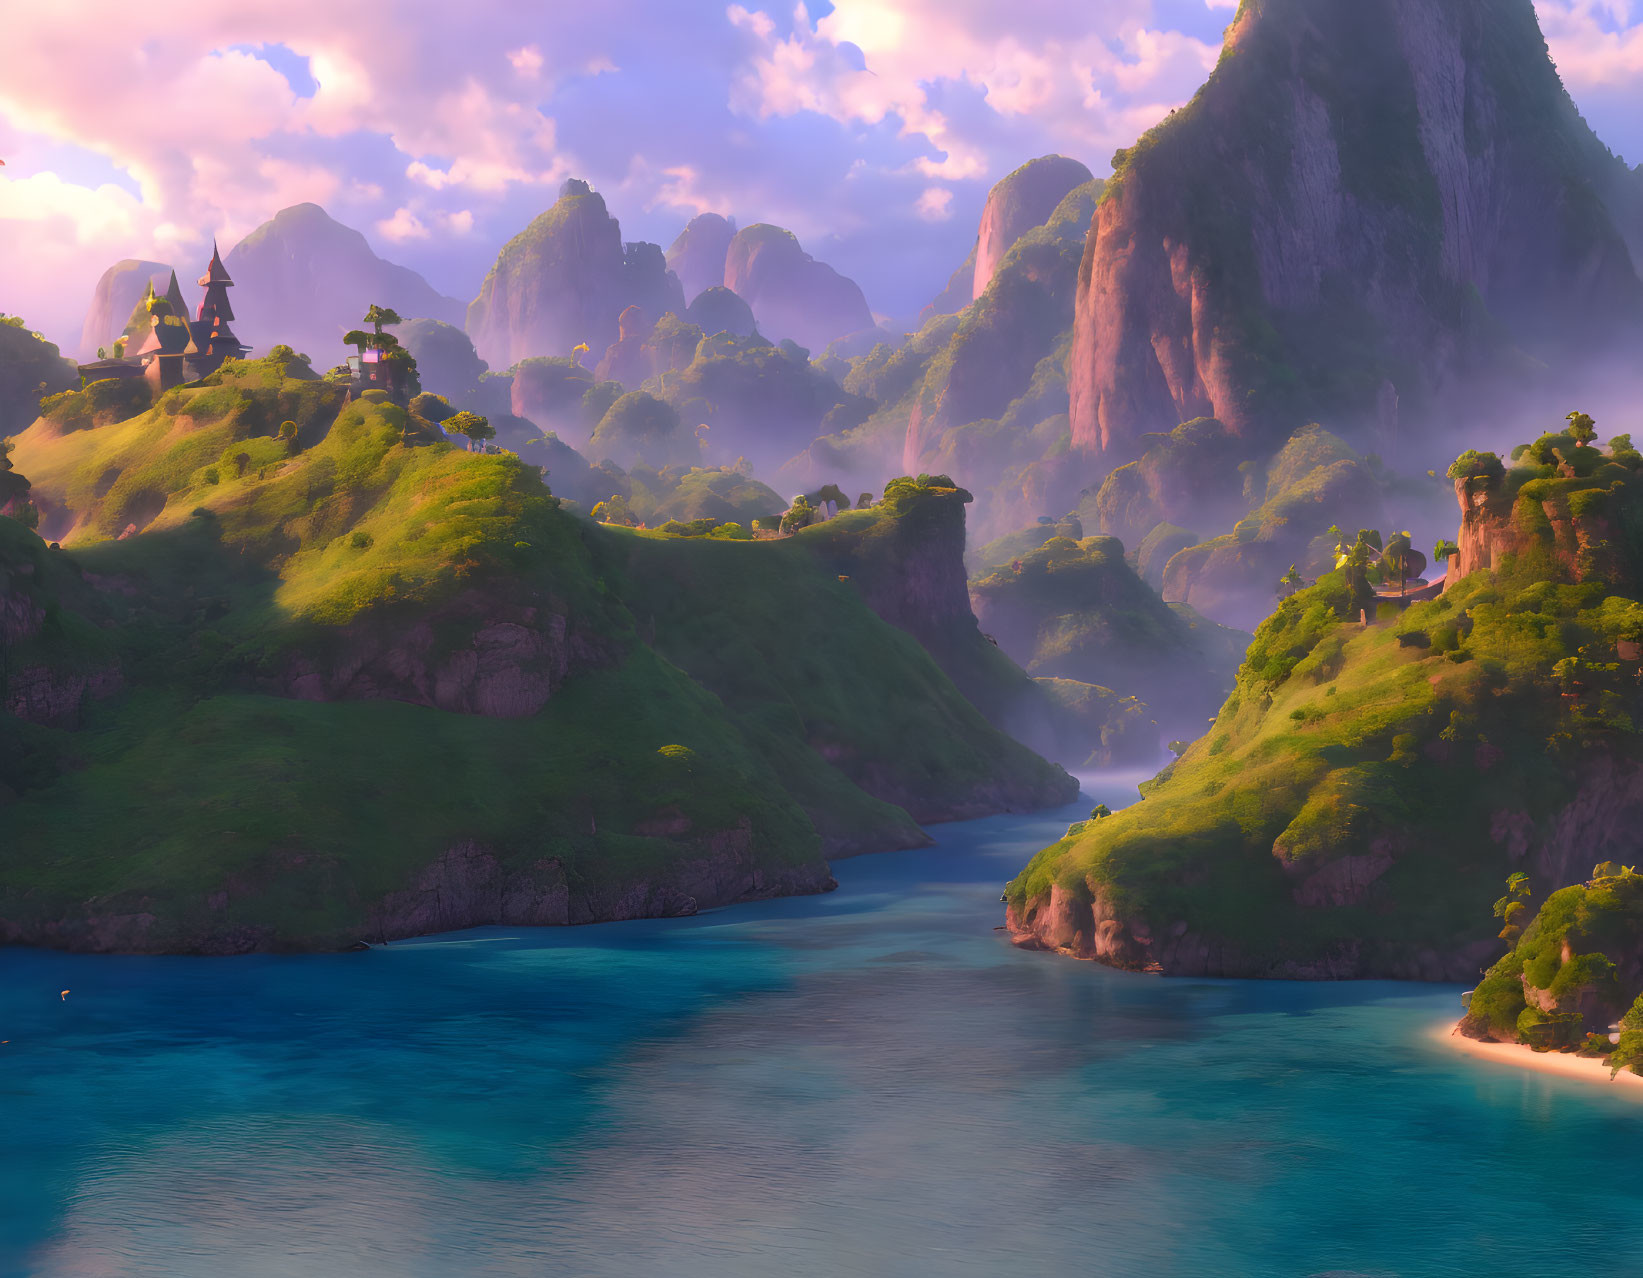 Tranquil fantasy landscape with green islands, castle on hill, serene river at sunrise